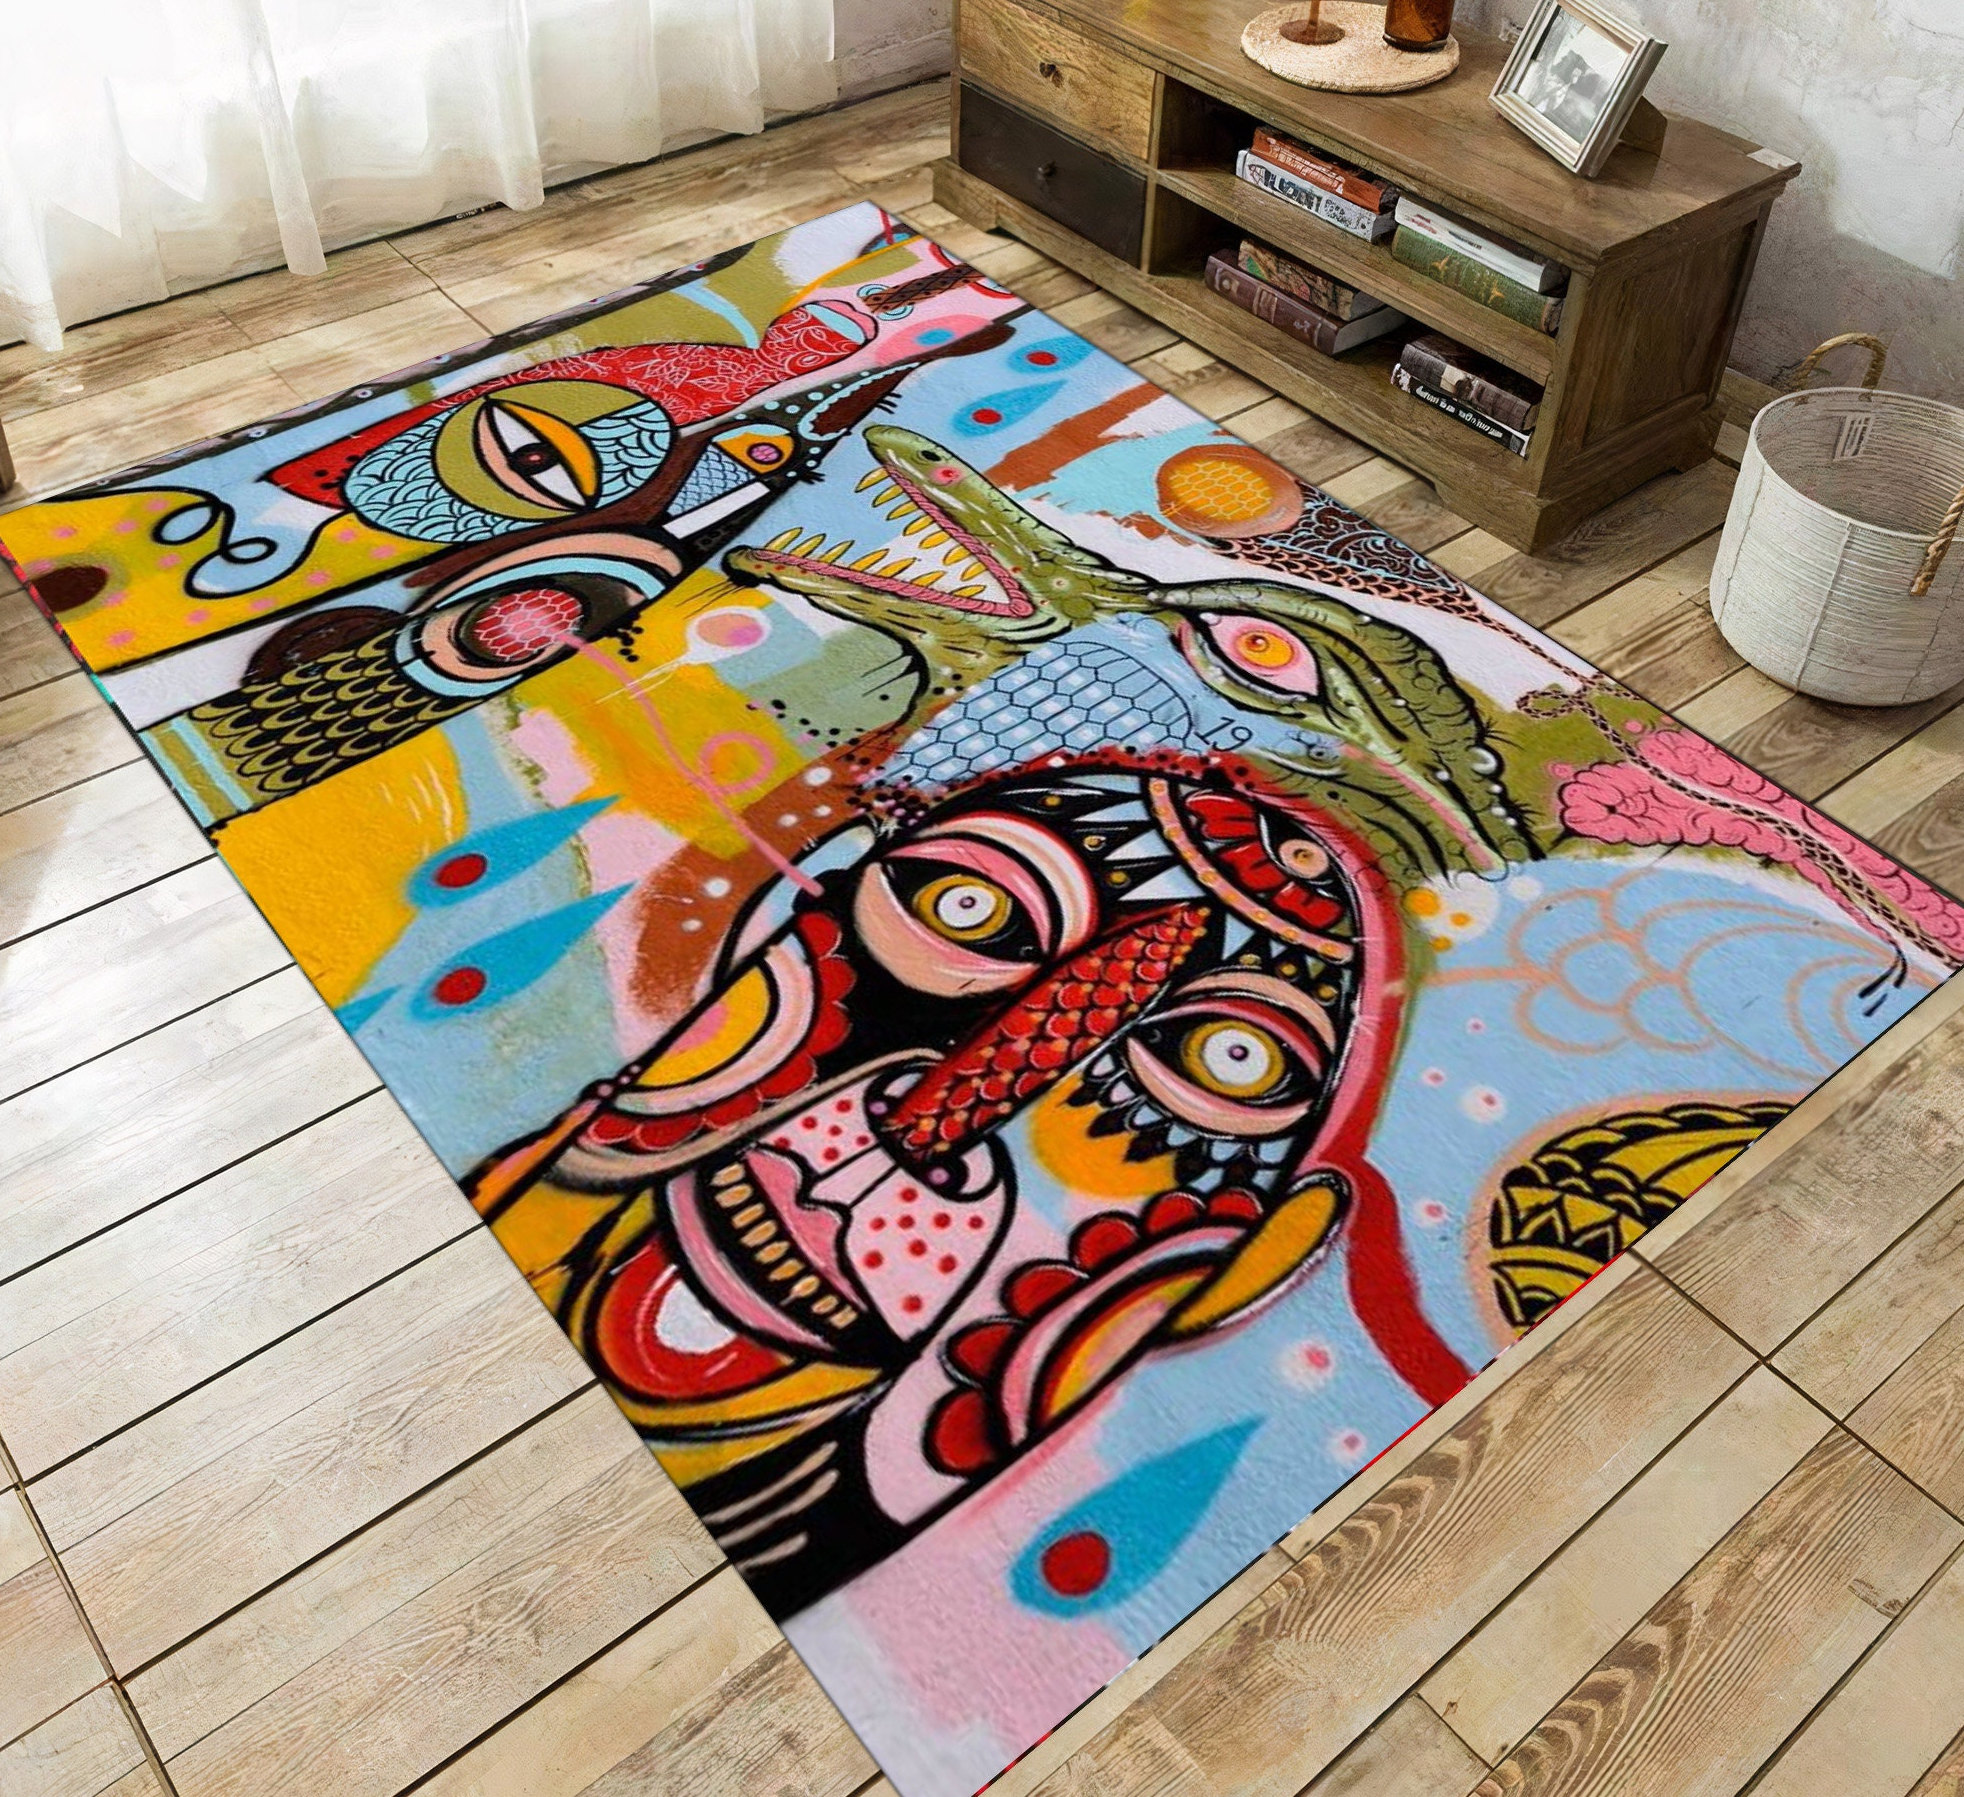 Graffiti Rug Carpet, Paint Patterned Carpet, Colorful Rug